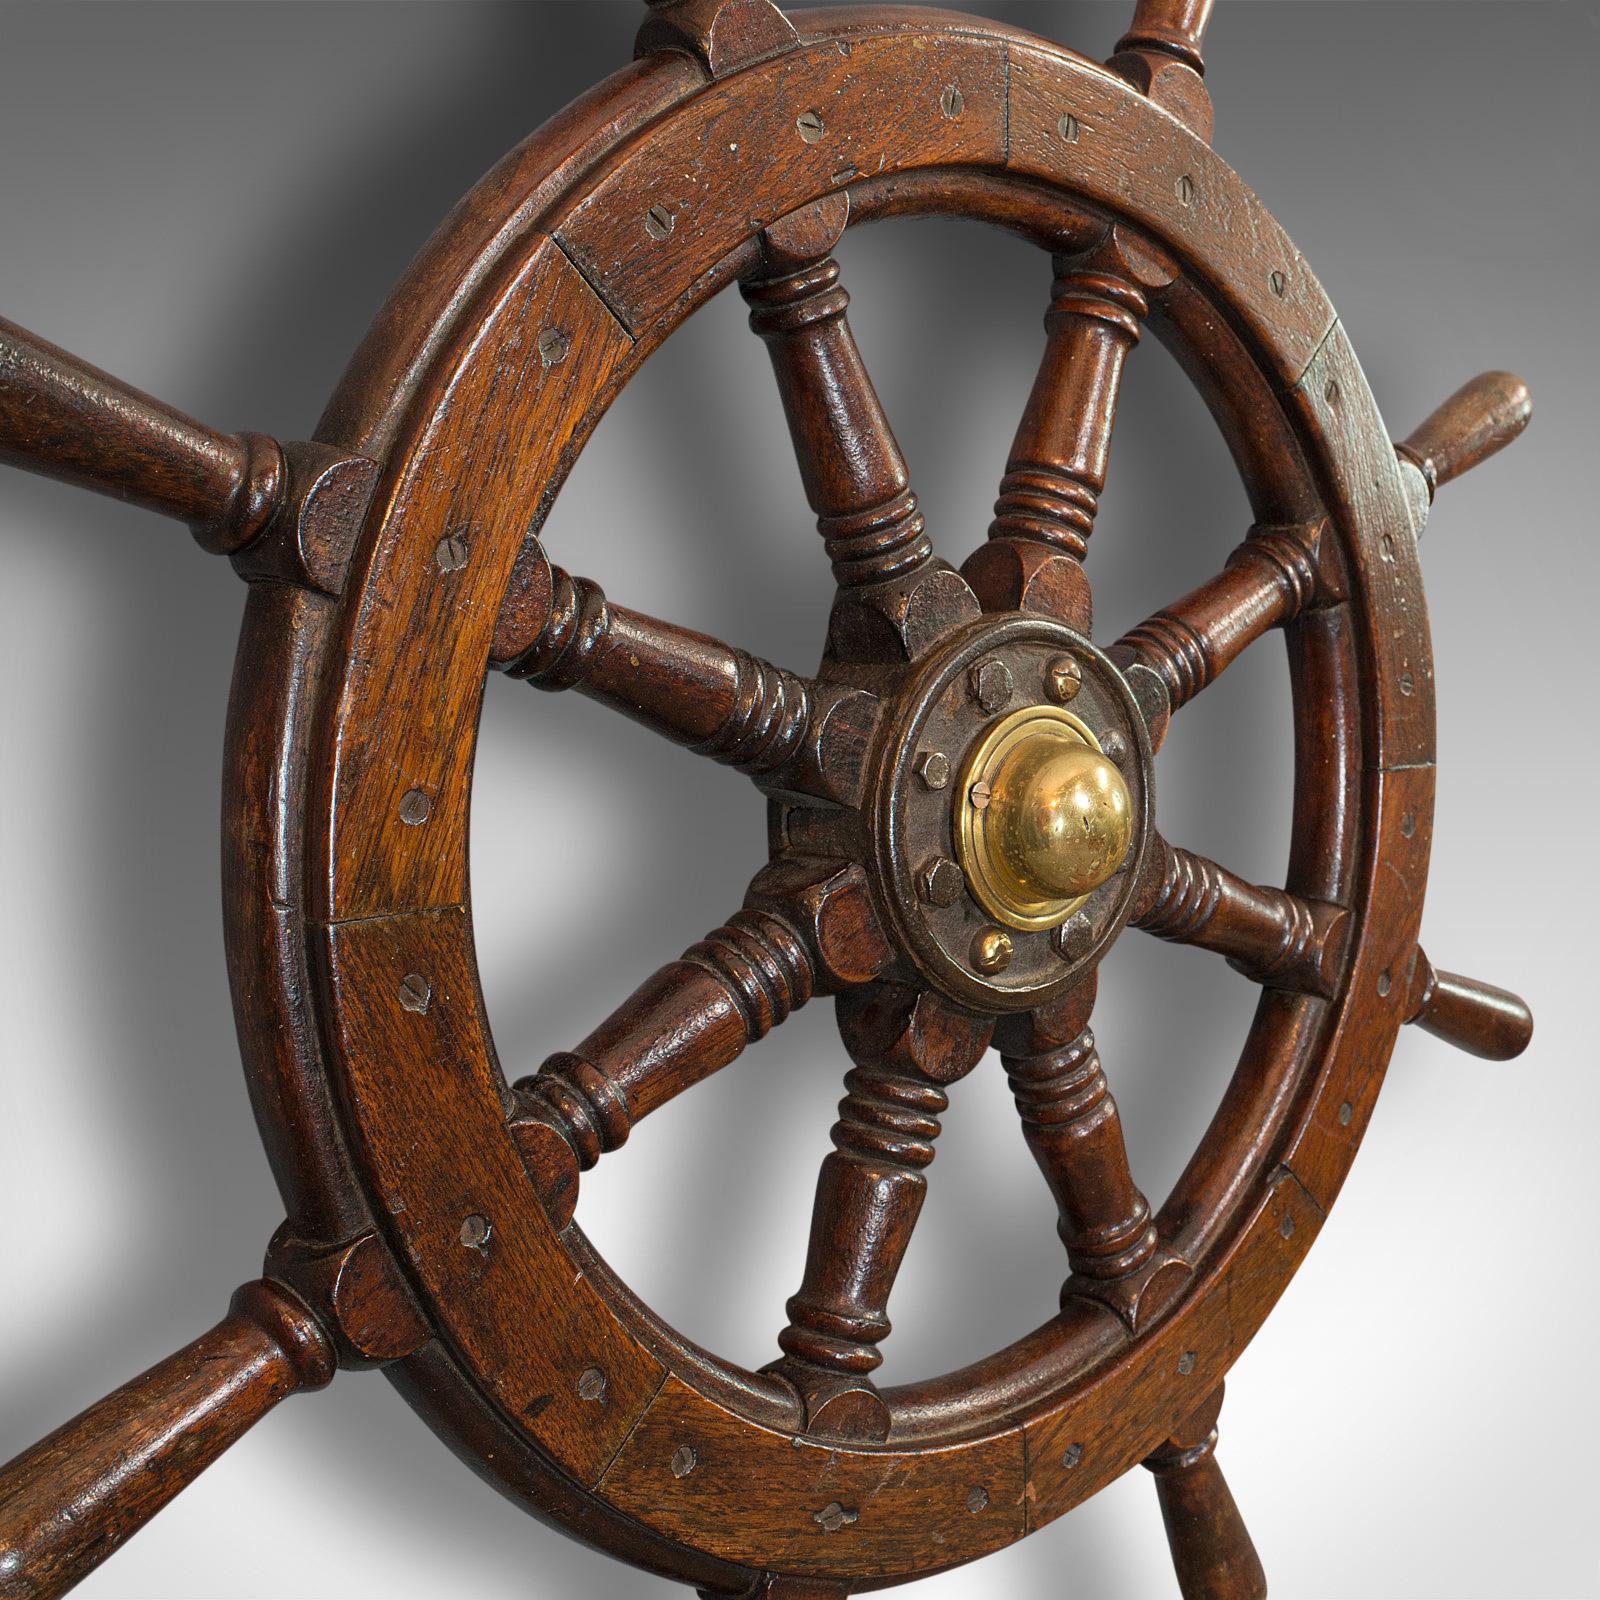 British Antique Ship's Wheel, English, Oak, Brass, Maritime, Decorative, Victorian, 1900